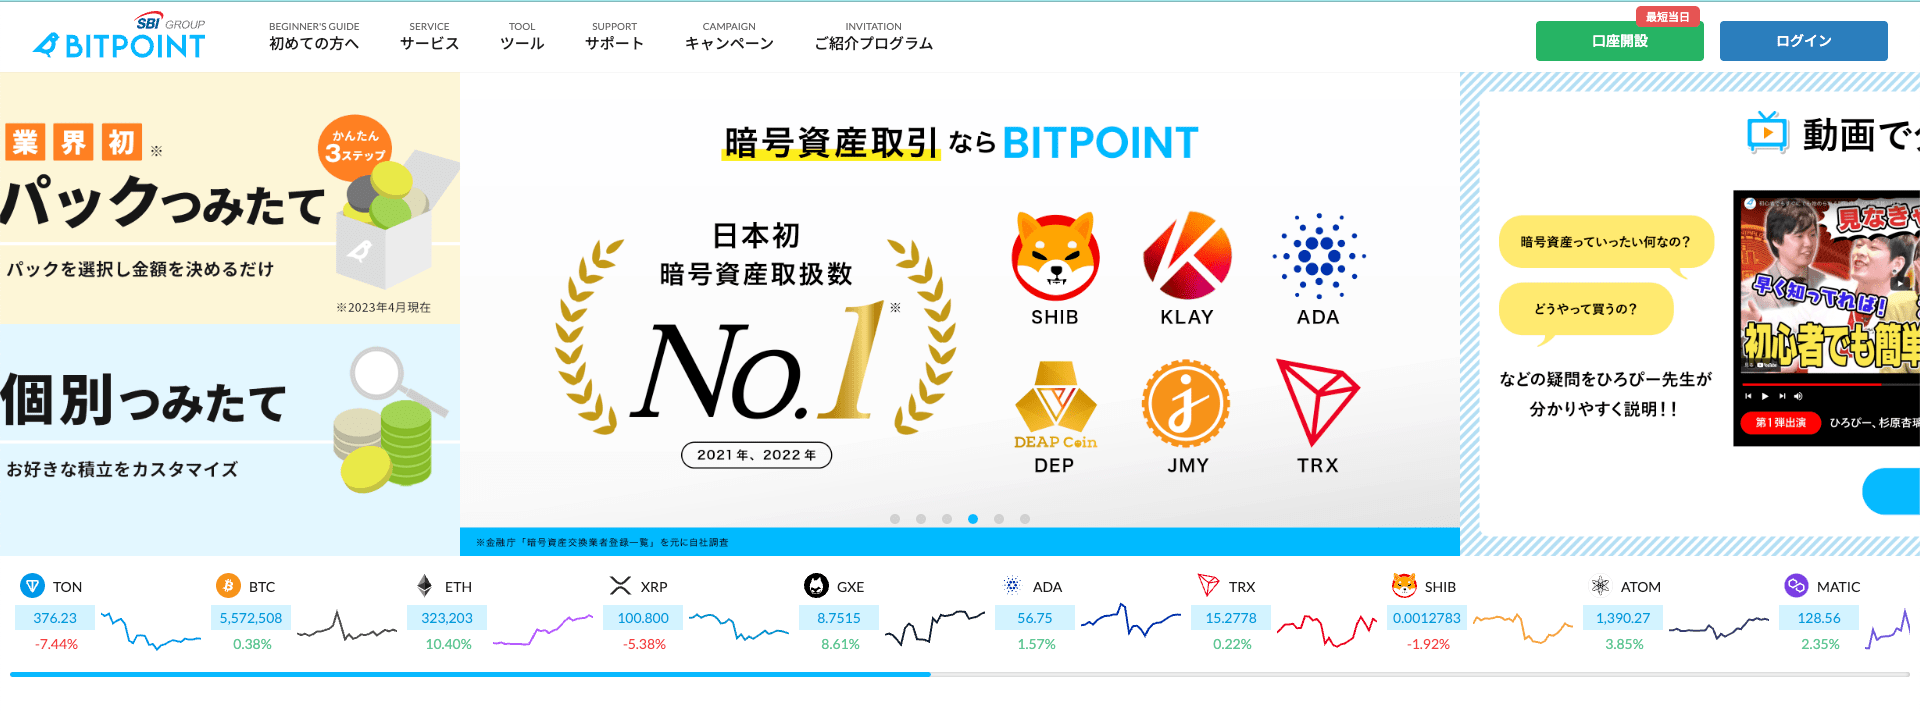 Bitpoint 公式サイト